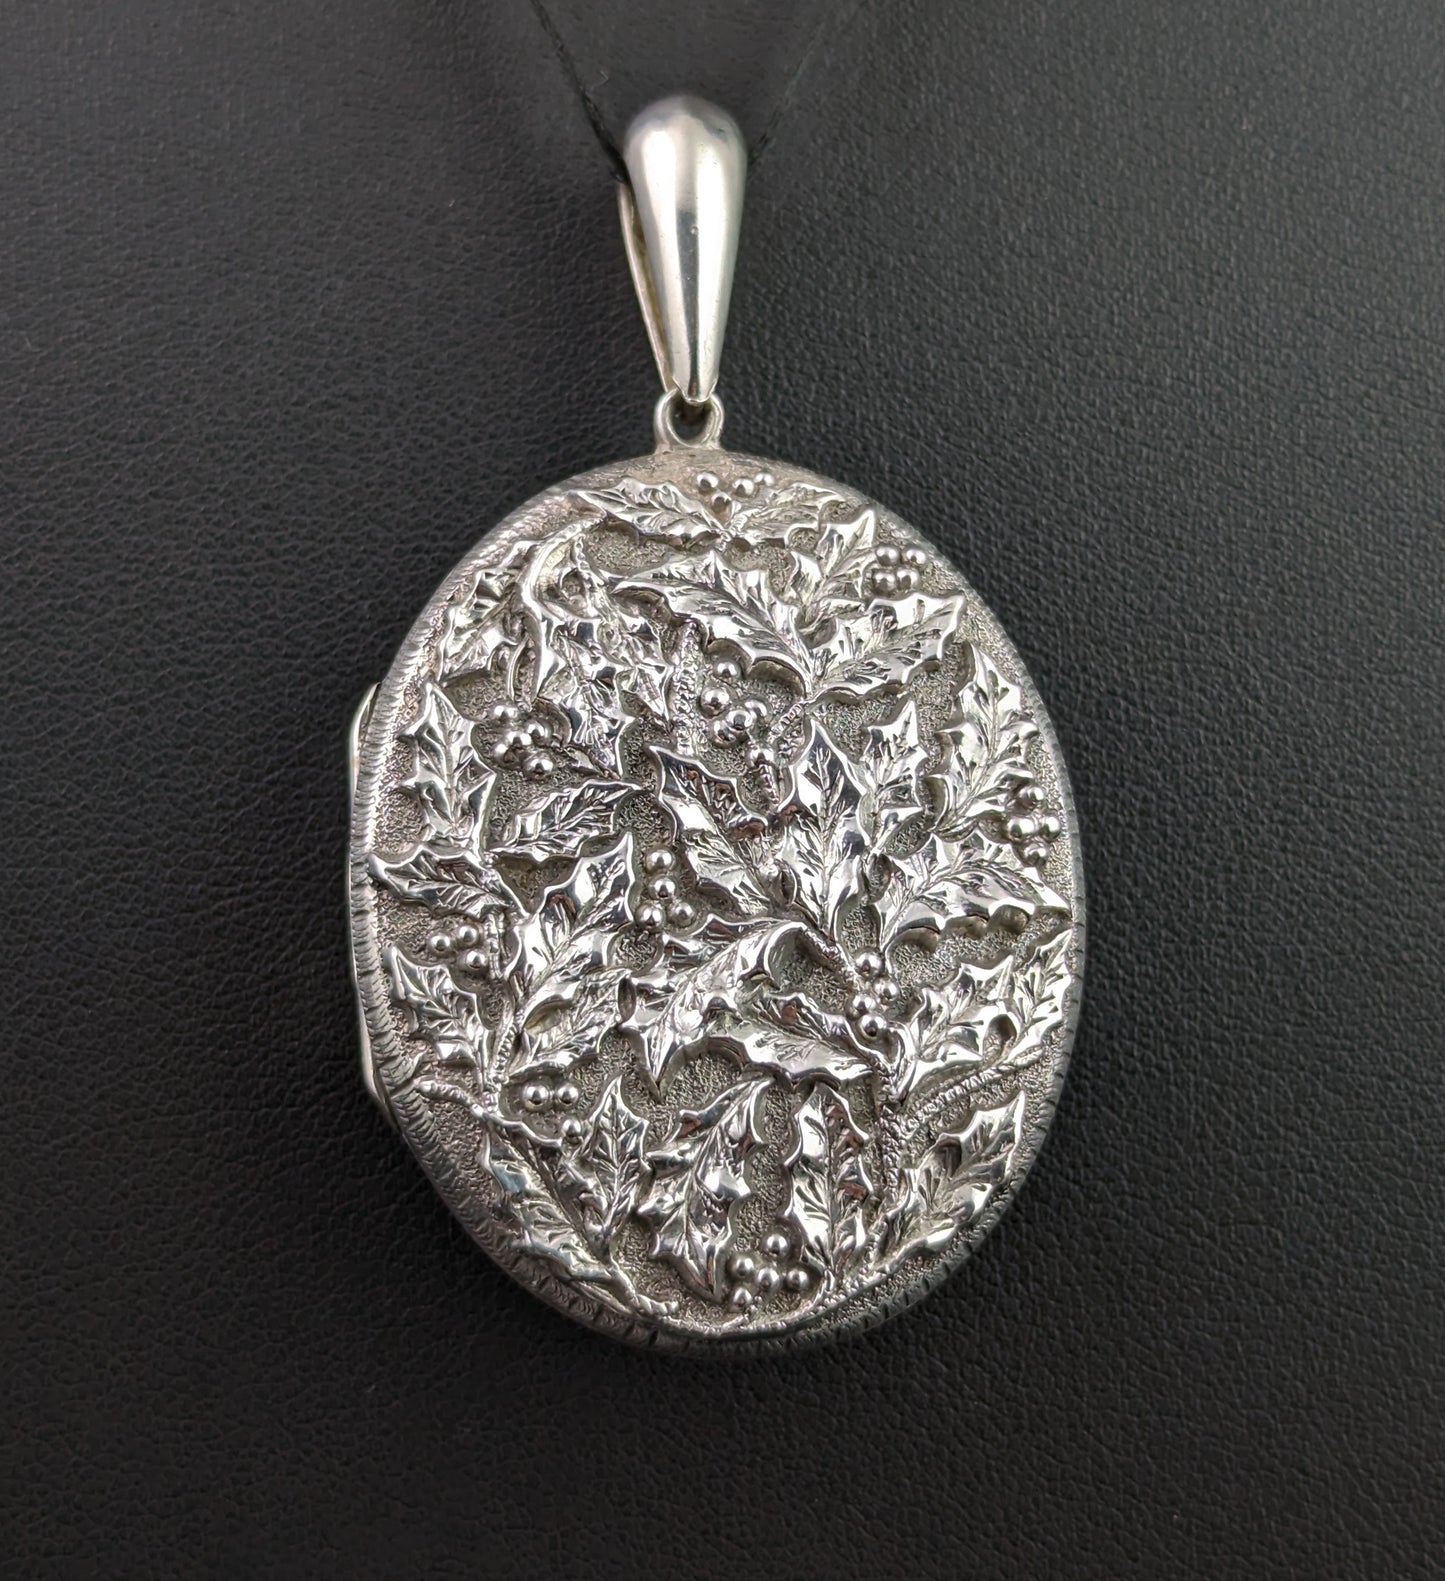 Antique Victorian silver locket pendant, Holly leaf